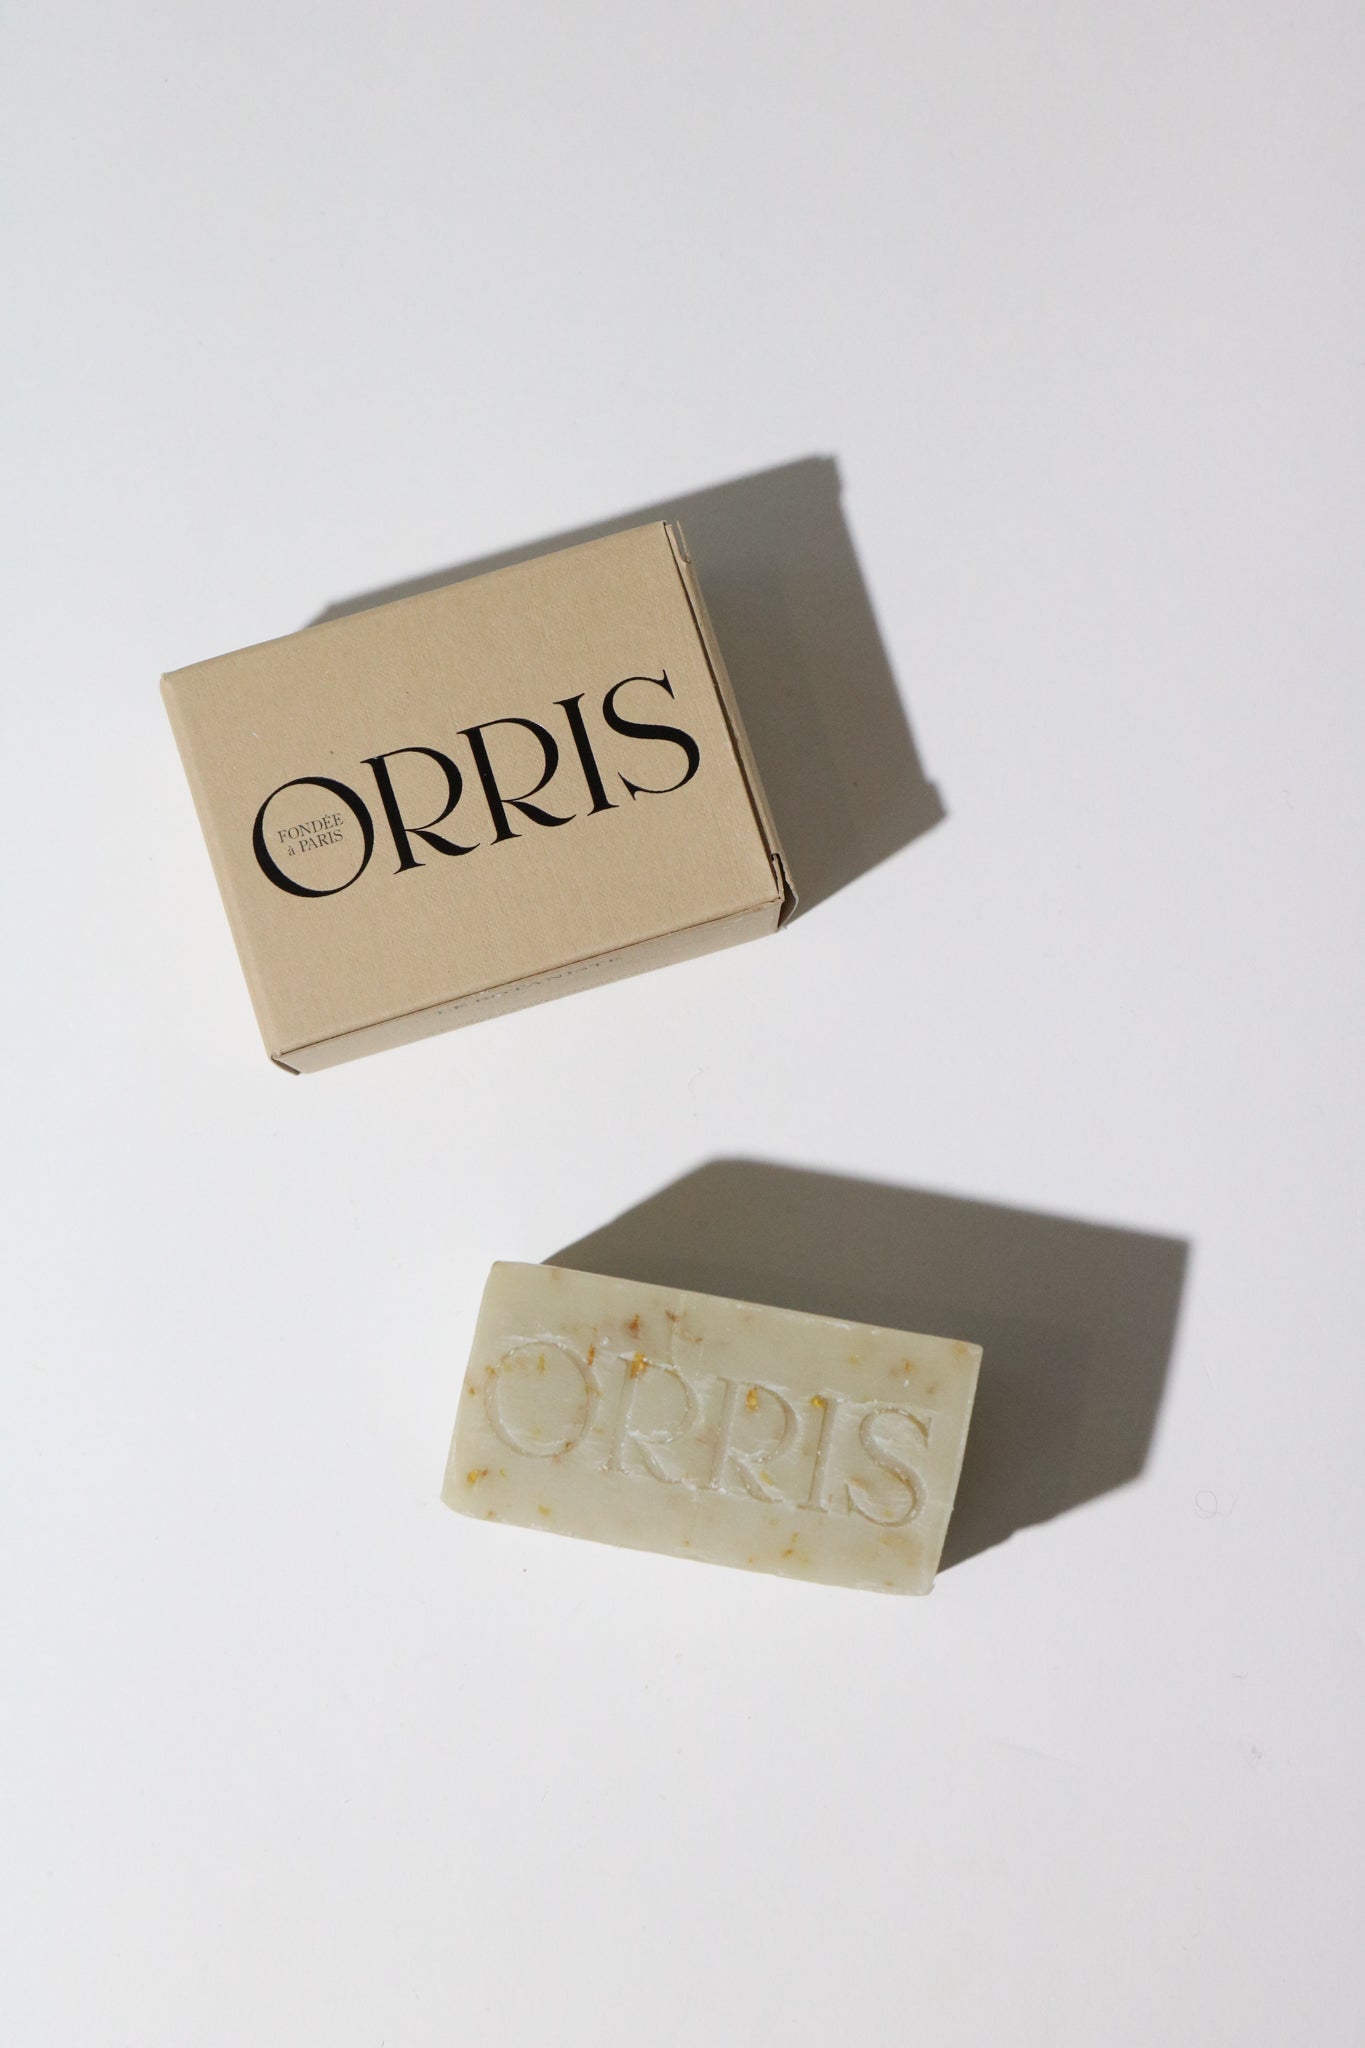 Shop Sommer Orris Paris Le Botaniste Artisanal Soap